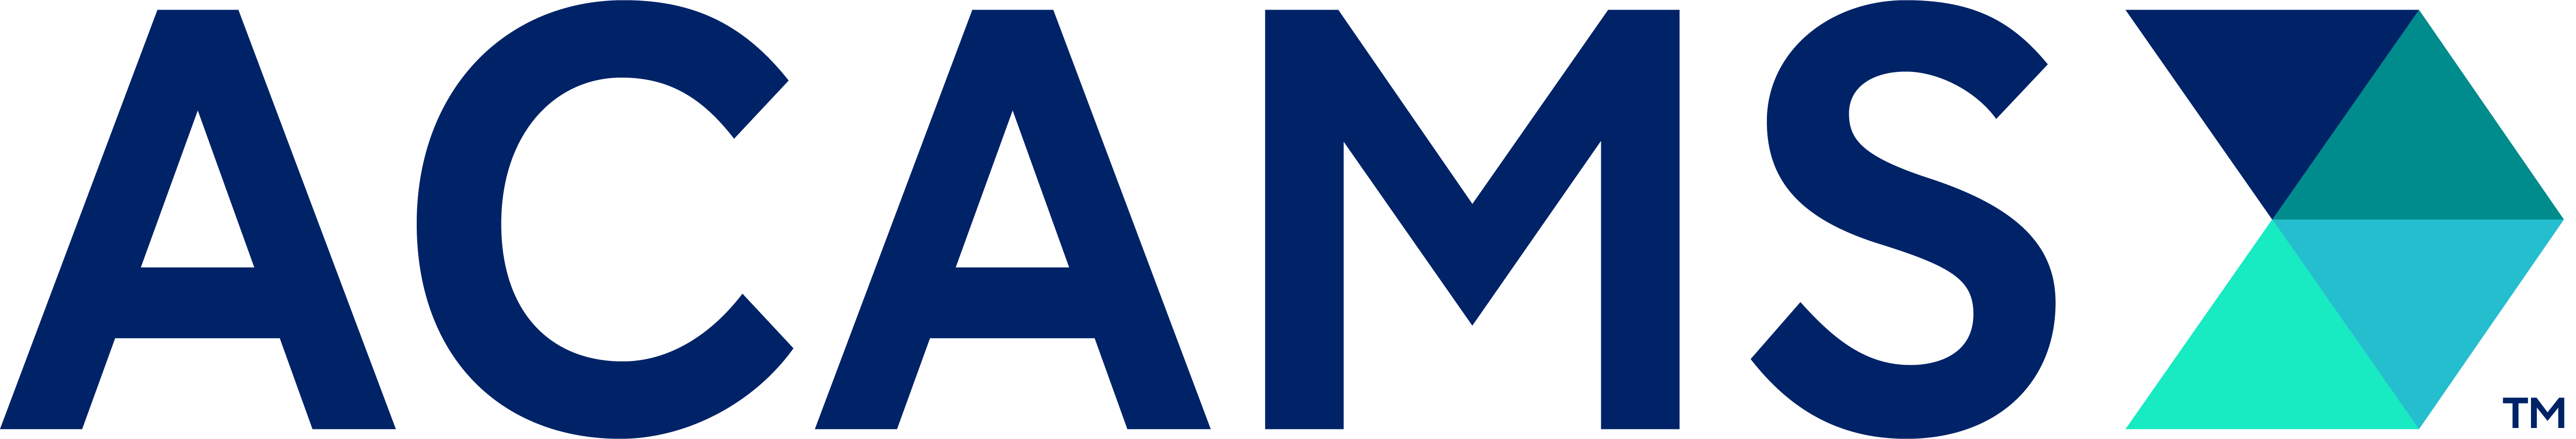 ACAMS Logo_TM_RGB.png